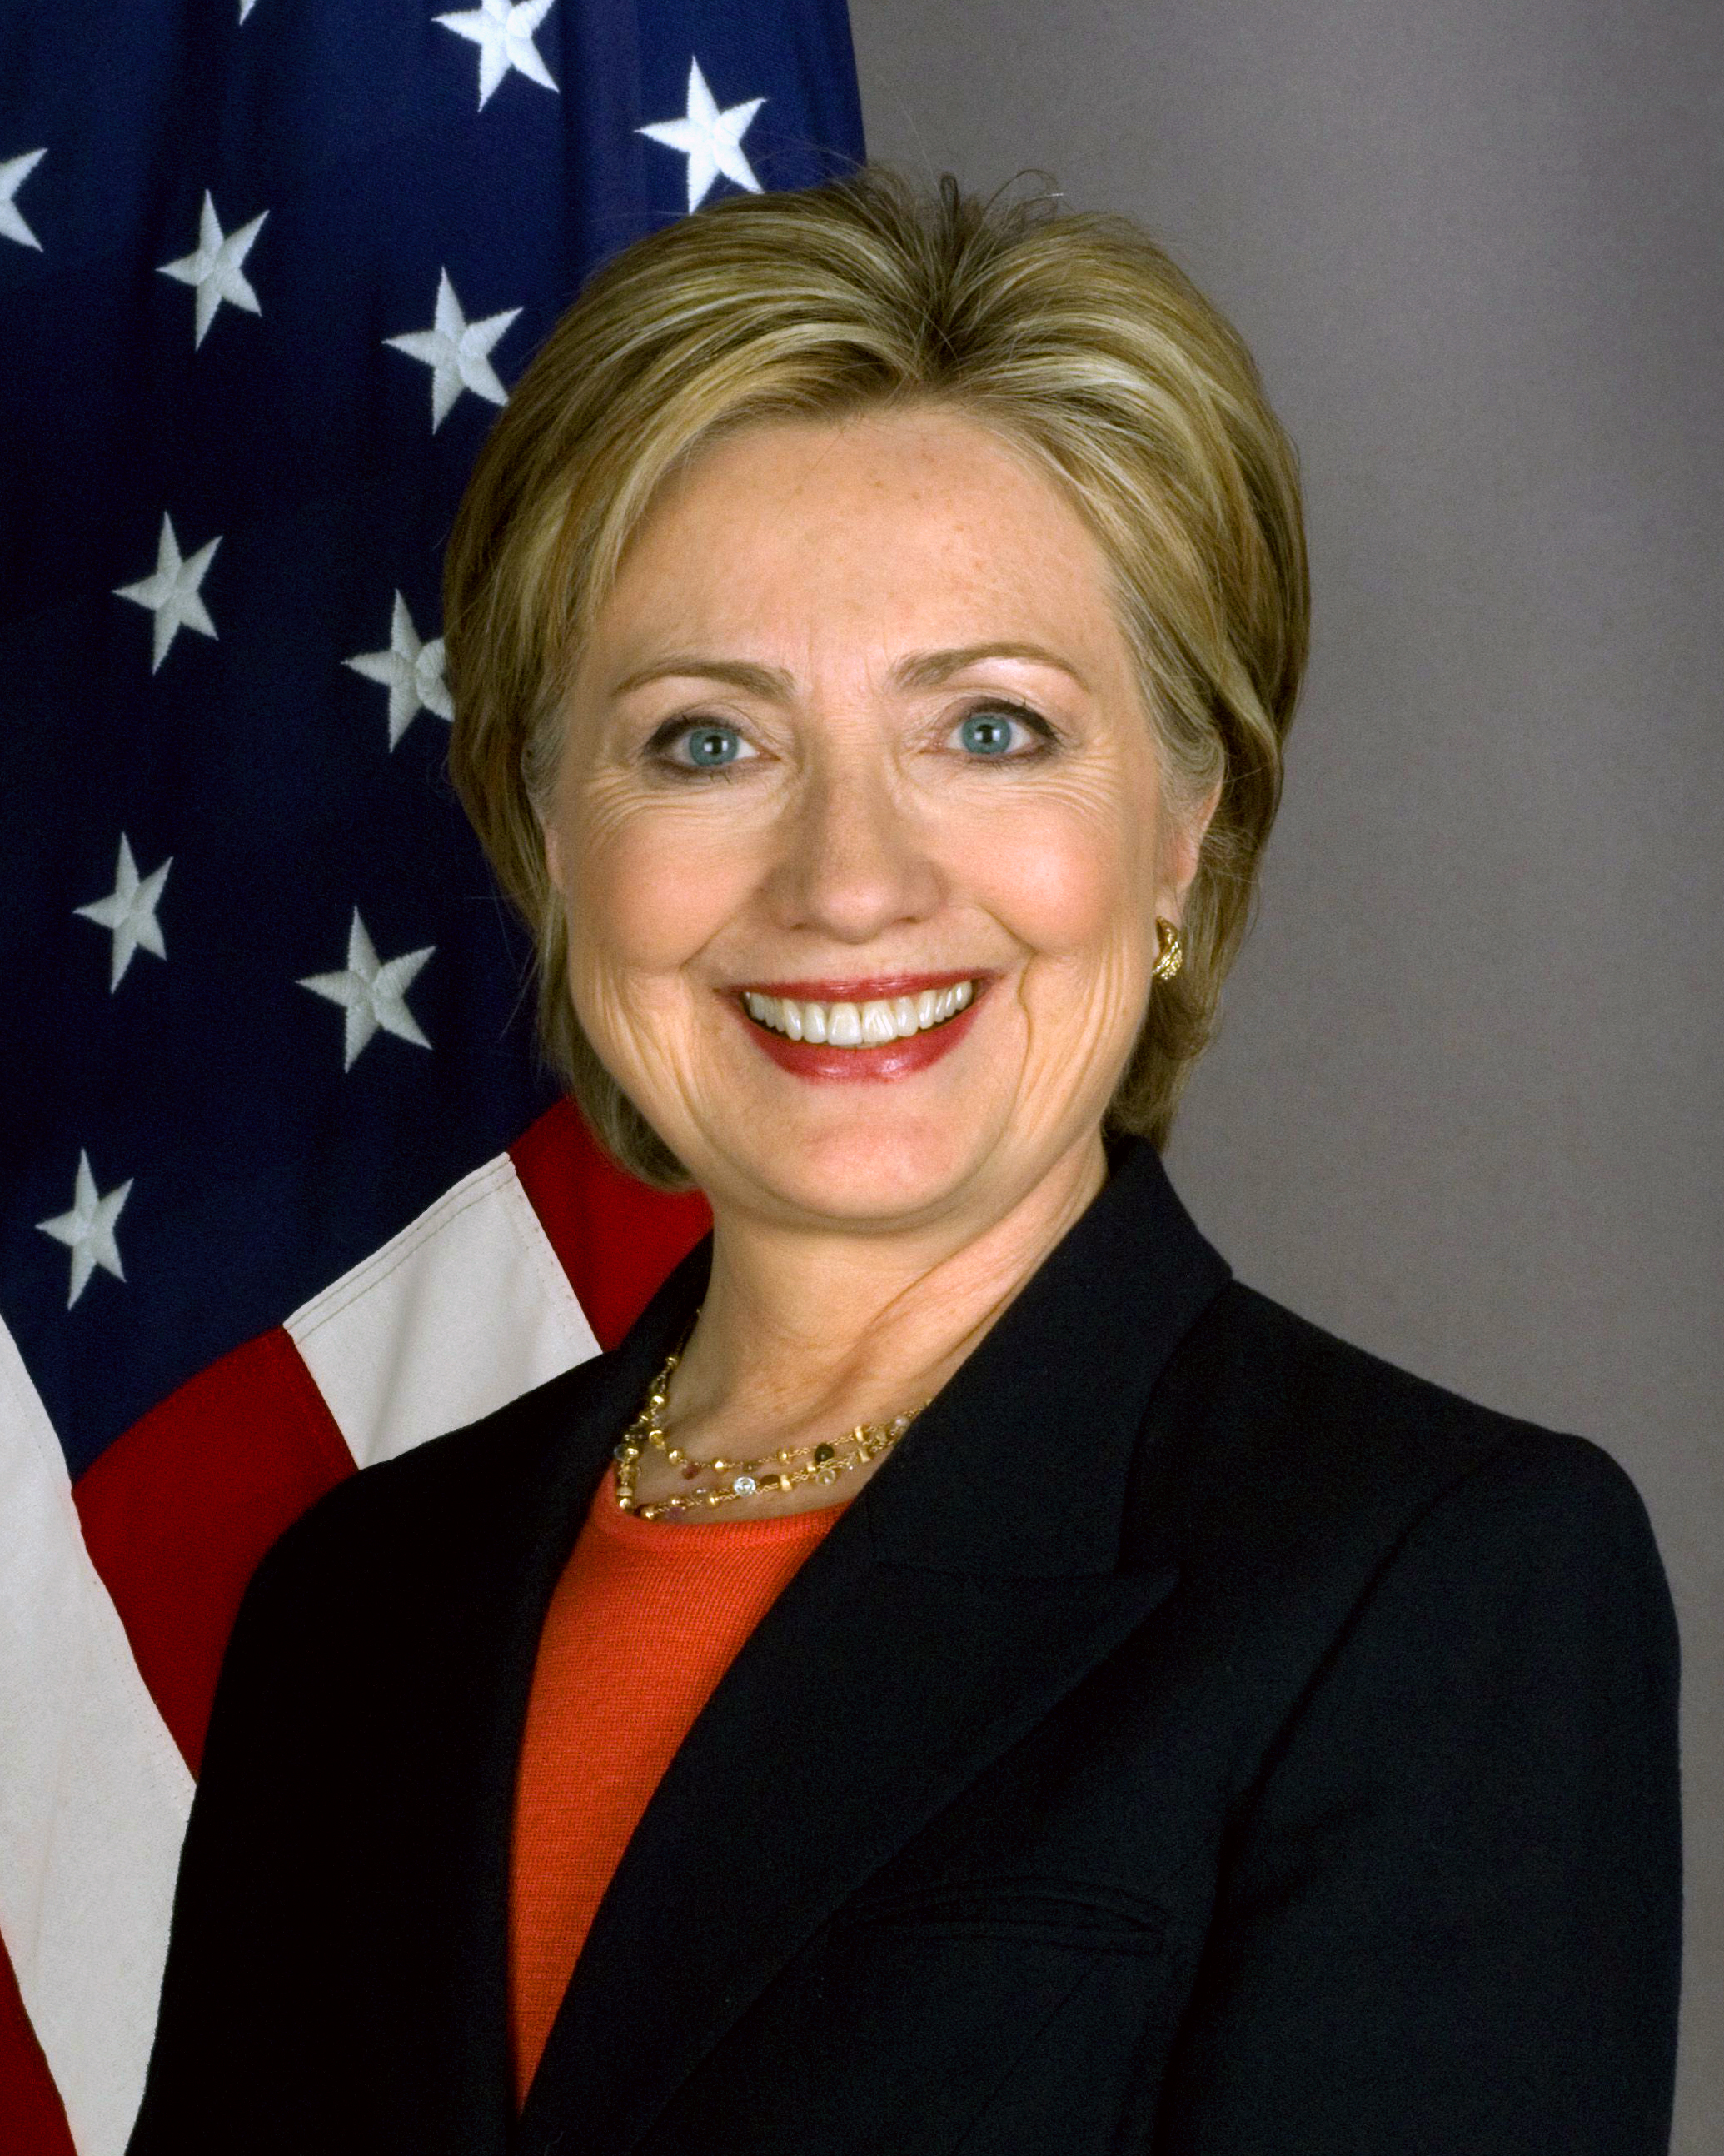 Editorial Board: We endorse Hillary Clinton for presidency